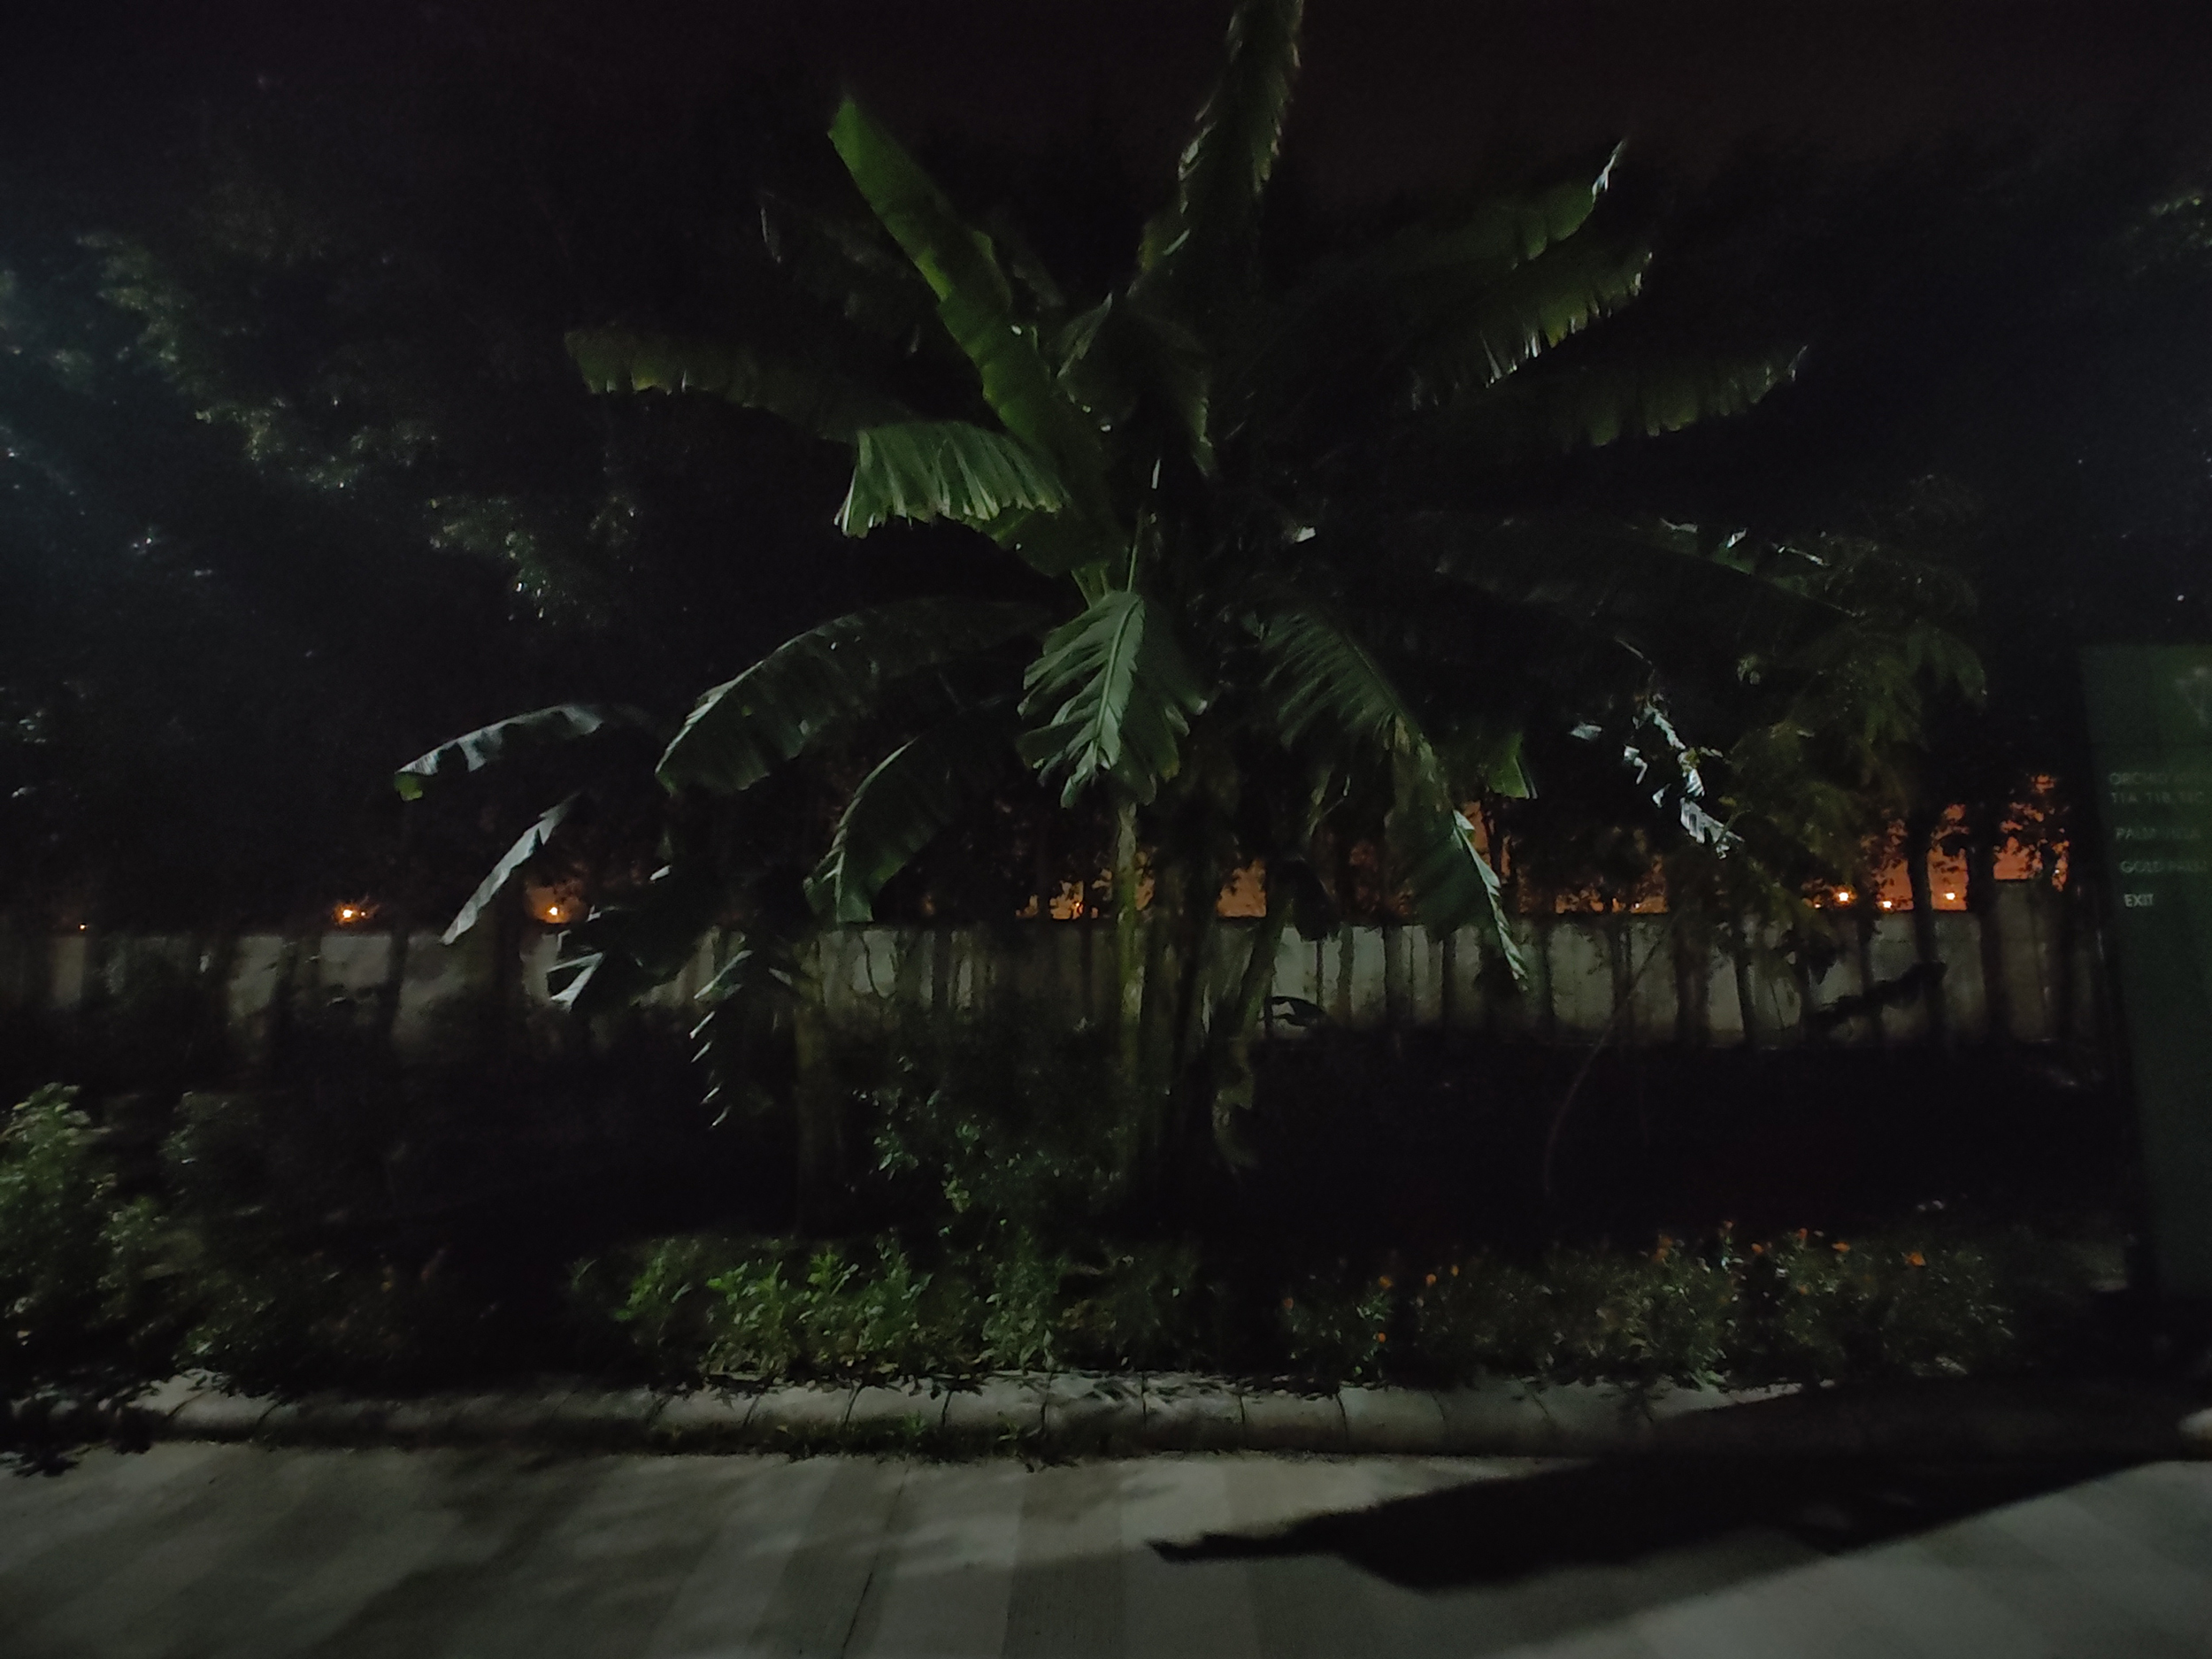 Motorola Edge Plus 2022 camera sample banana tree at night with ultrawide angle camera.